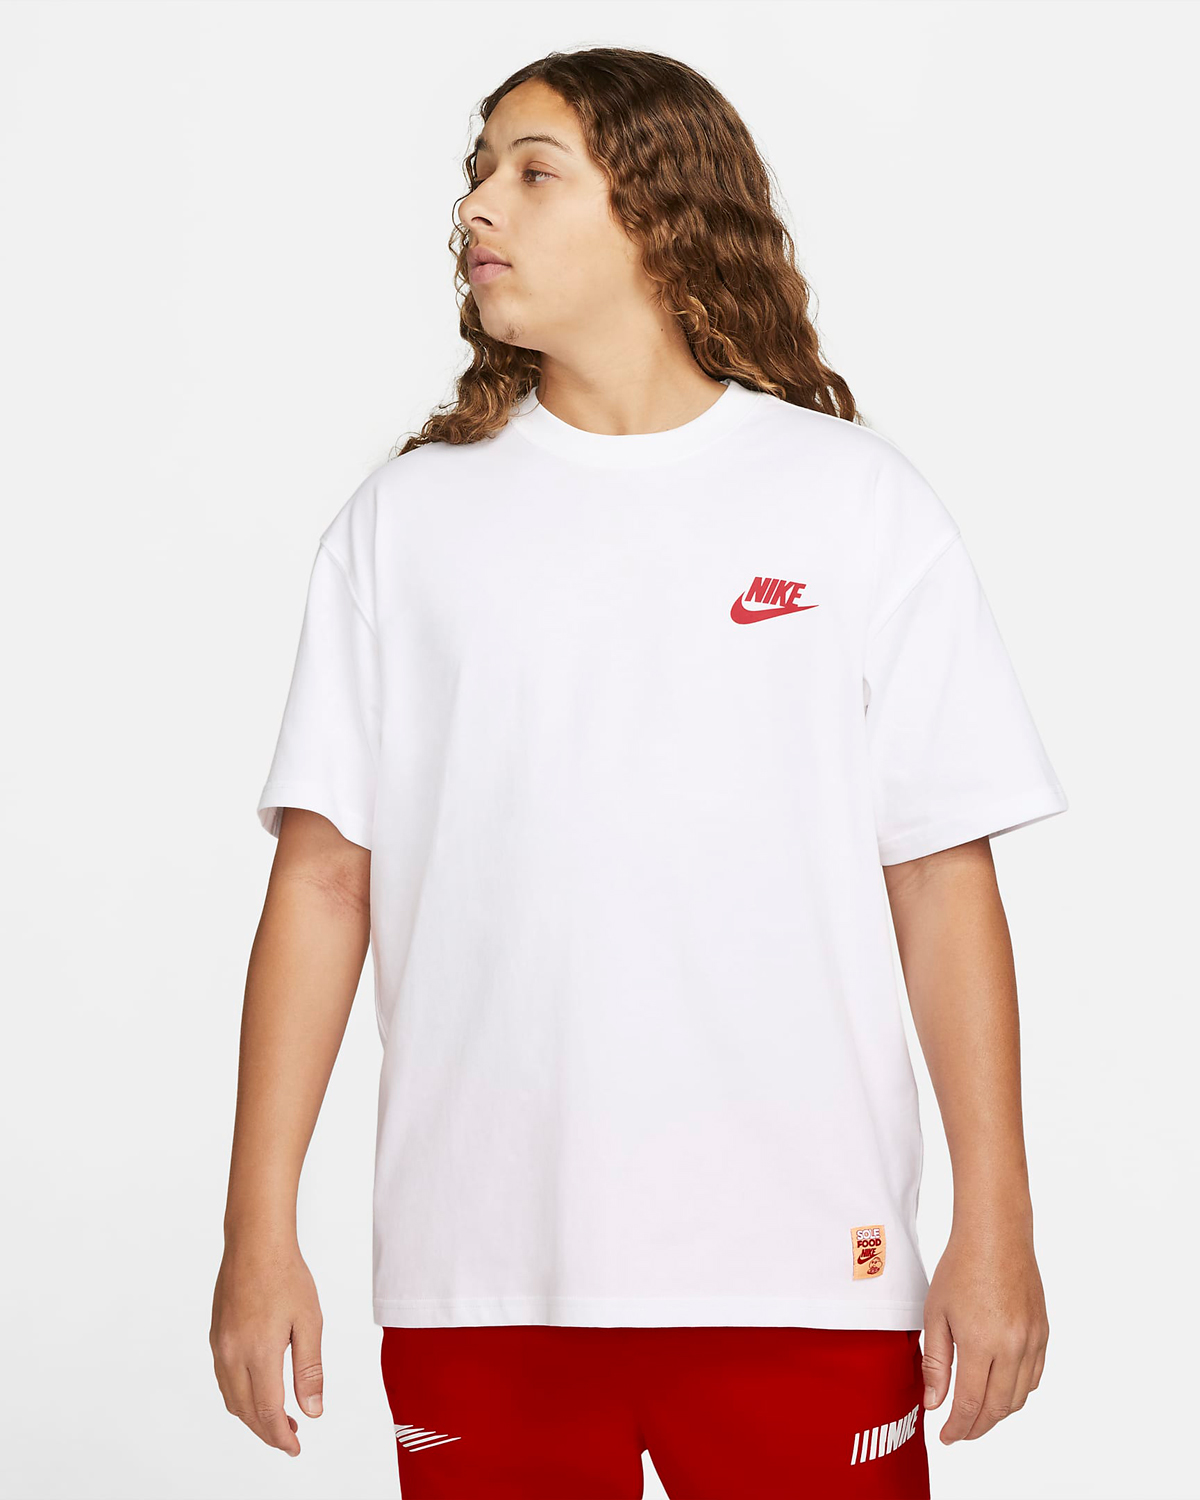 Nike-Sportswear-Dumpings-Dunks-T-Shirt-White-Red-1